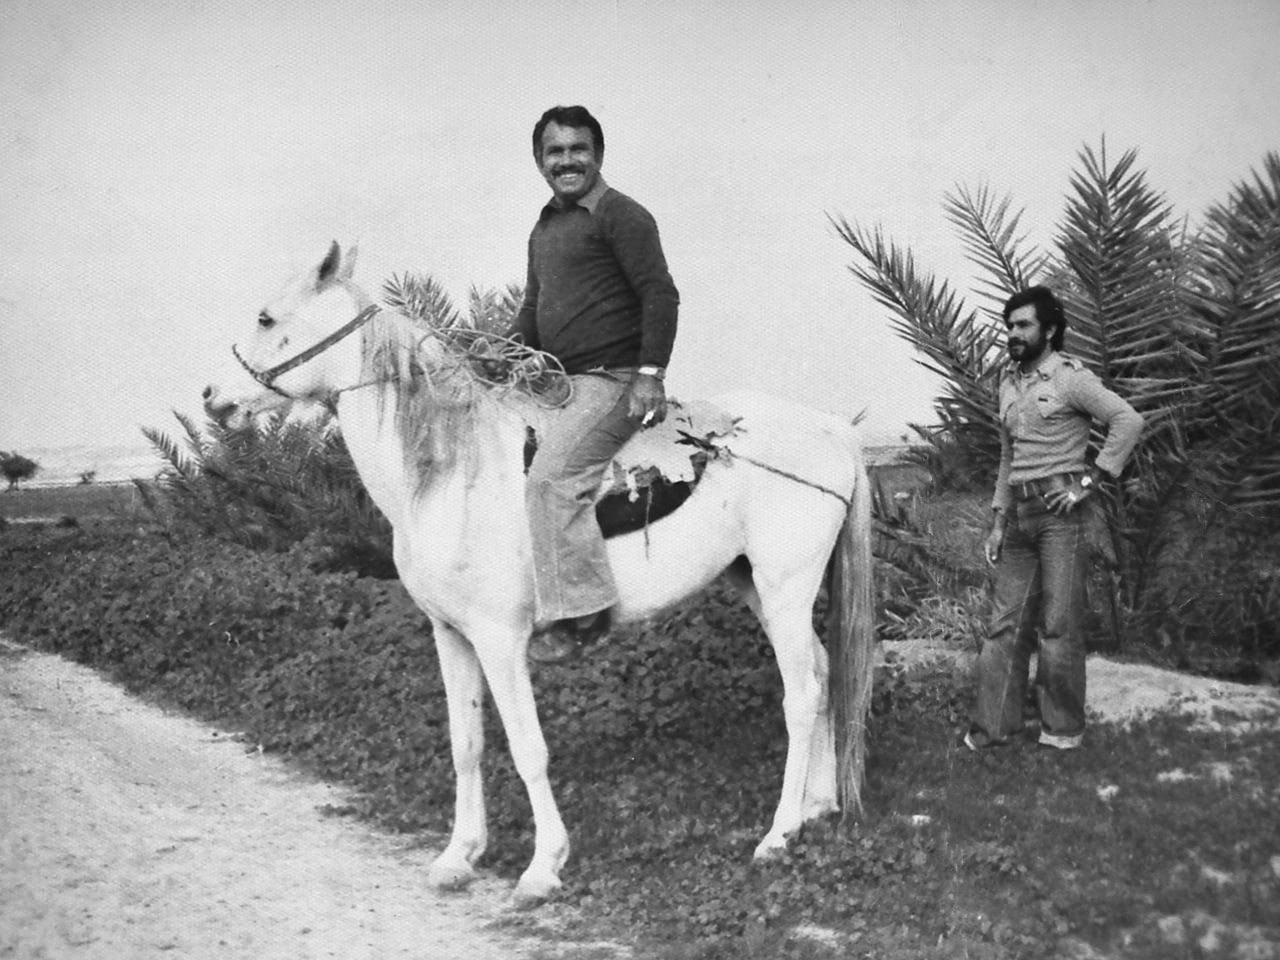 Iran, Bushehr, Bandar Ganaveh, Village Mall Mahmoud, April, circa 1970. My father (horseback) and Nasrallah Nazari.